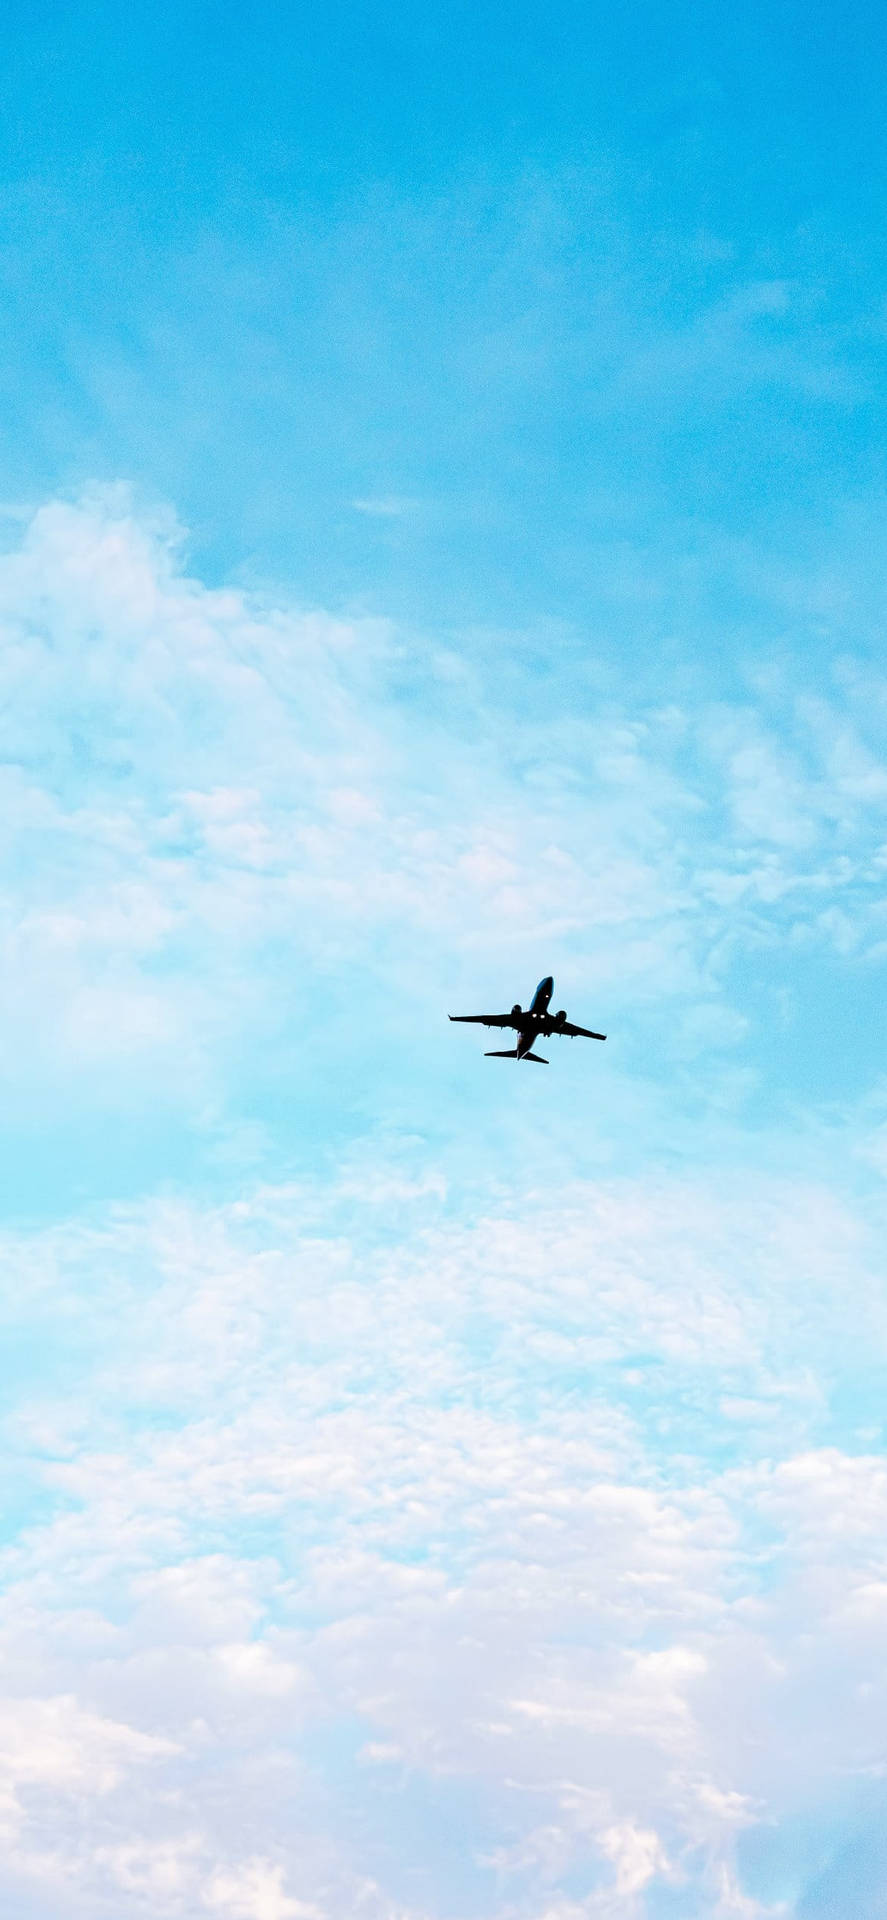 Cute Pastel Blue Aesthetic Airplane In Sky Wallpaper